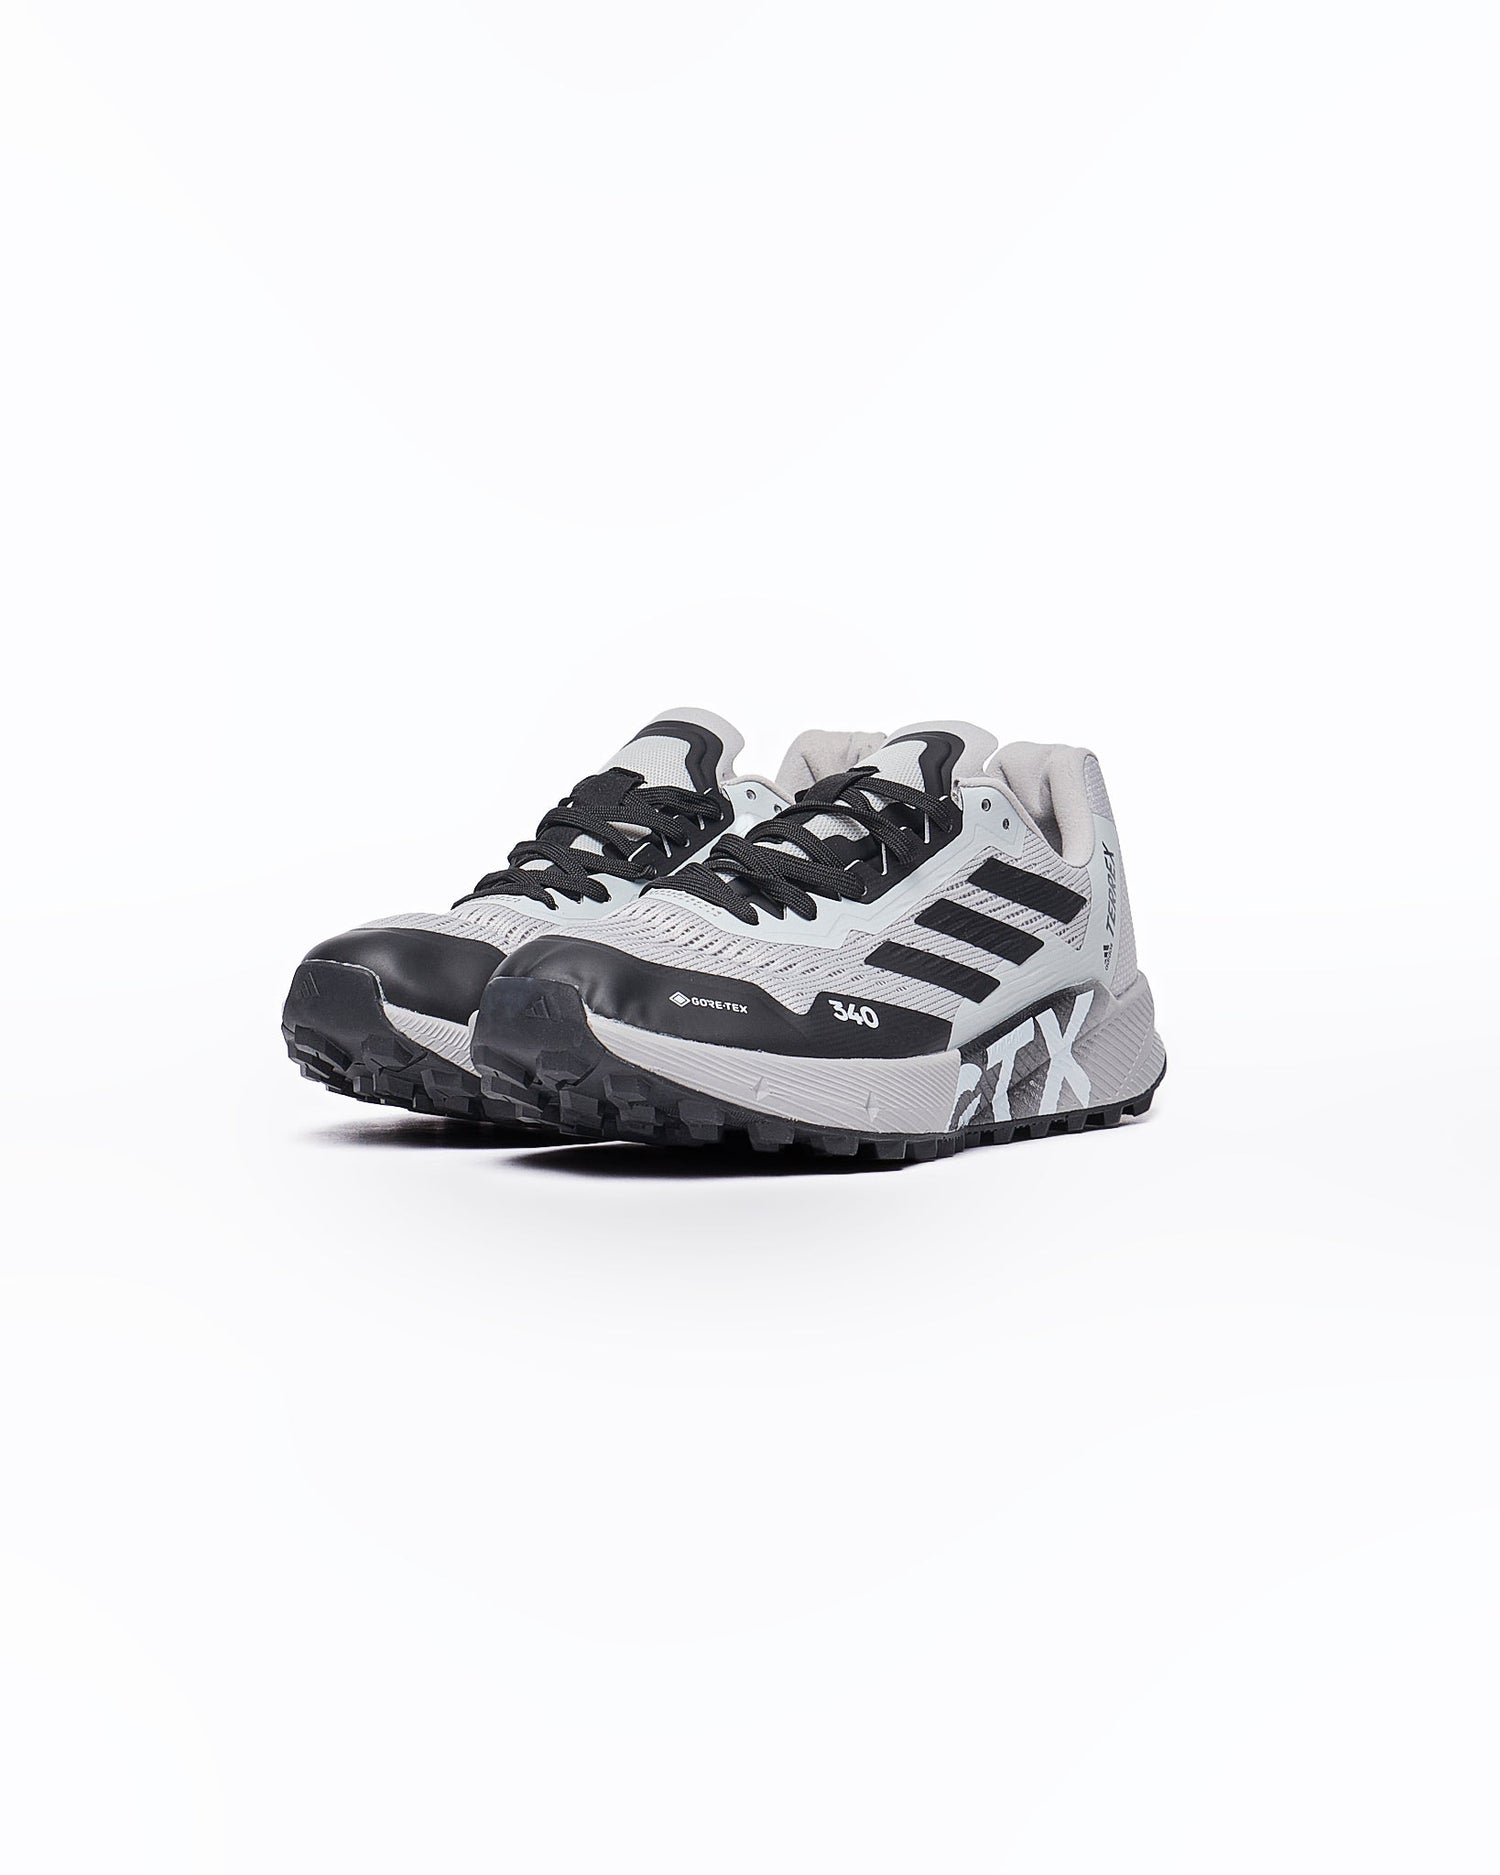 MOI OUTFIT-ADI Terrex Men Grey Runners Shoes 40.90